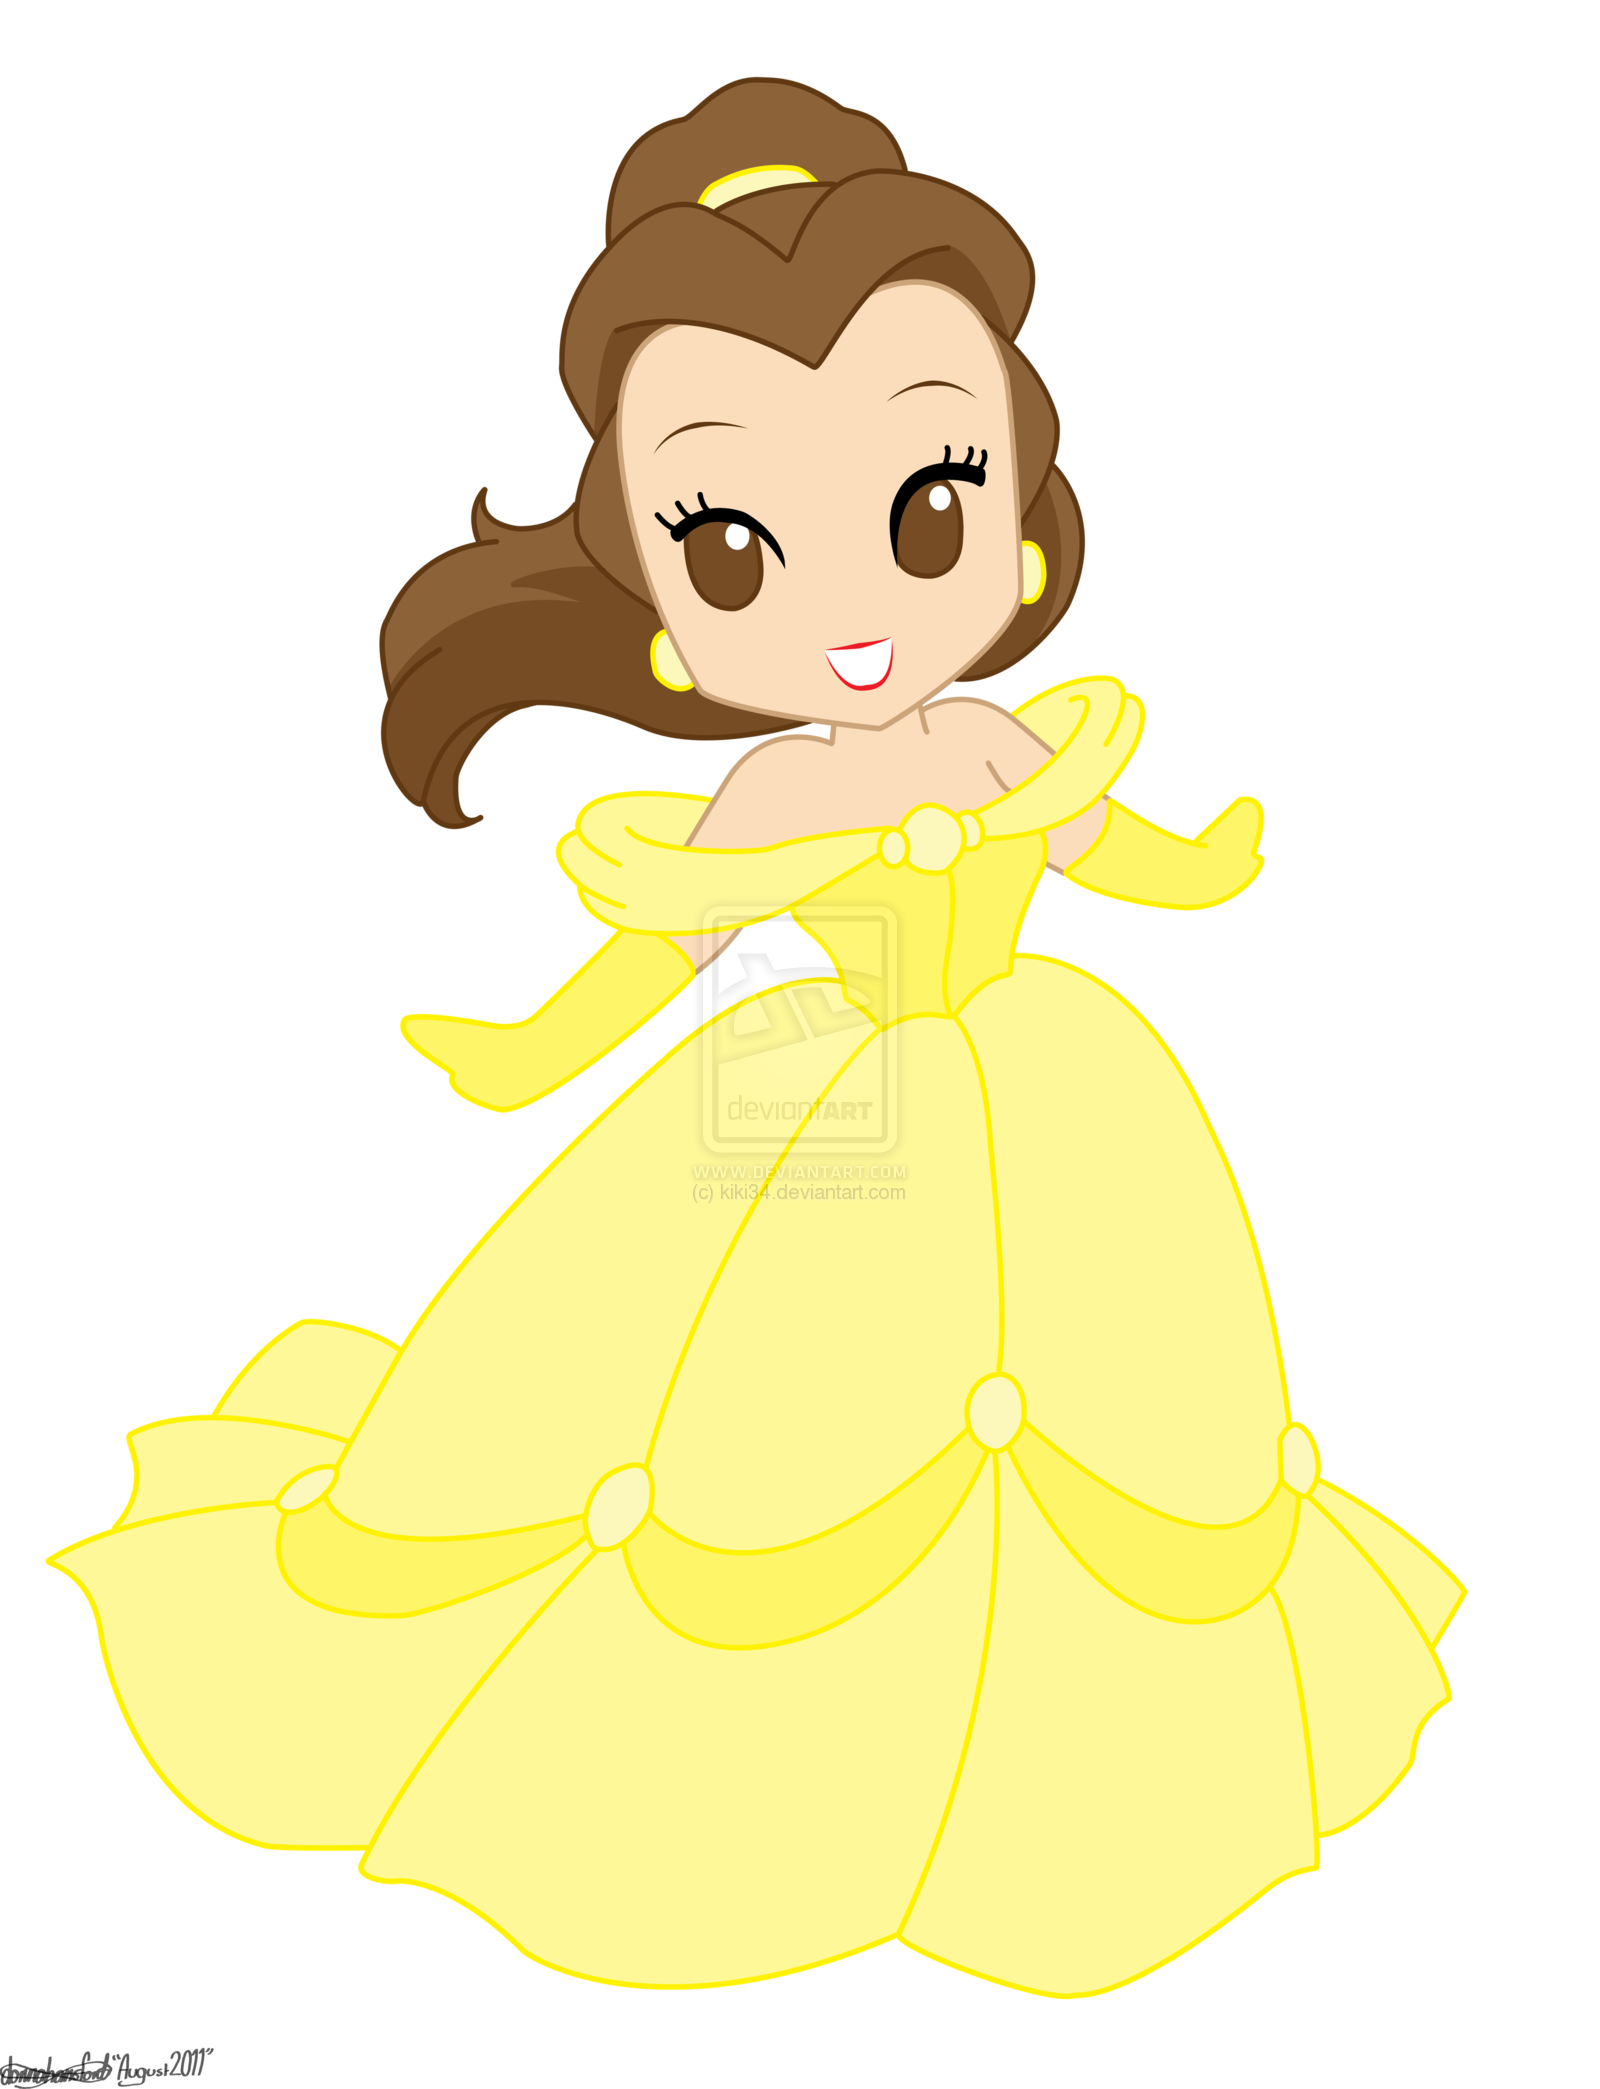 Belle clipart drawing. Disney princess cartoon at